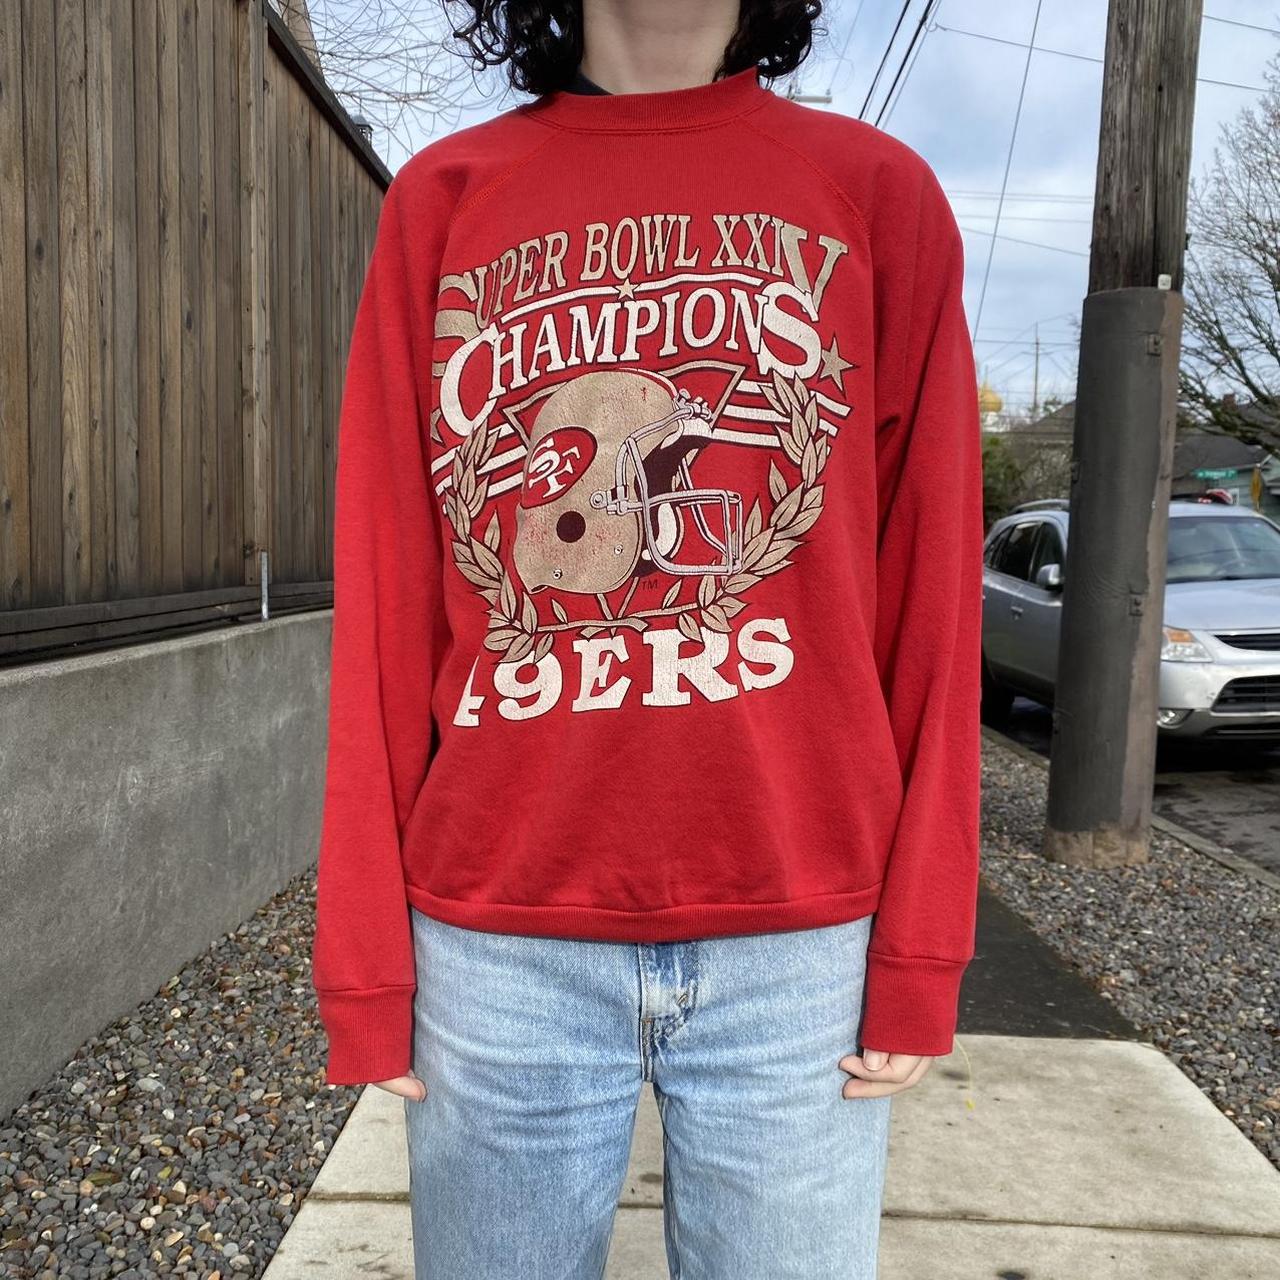 49ers retro sweatshirt